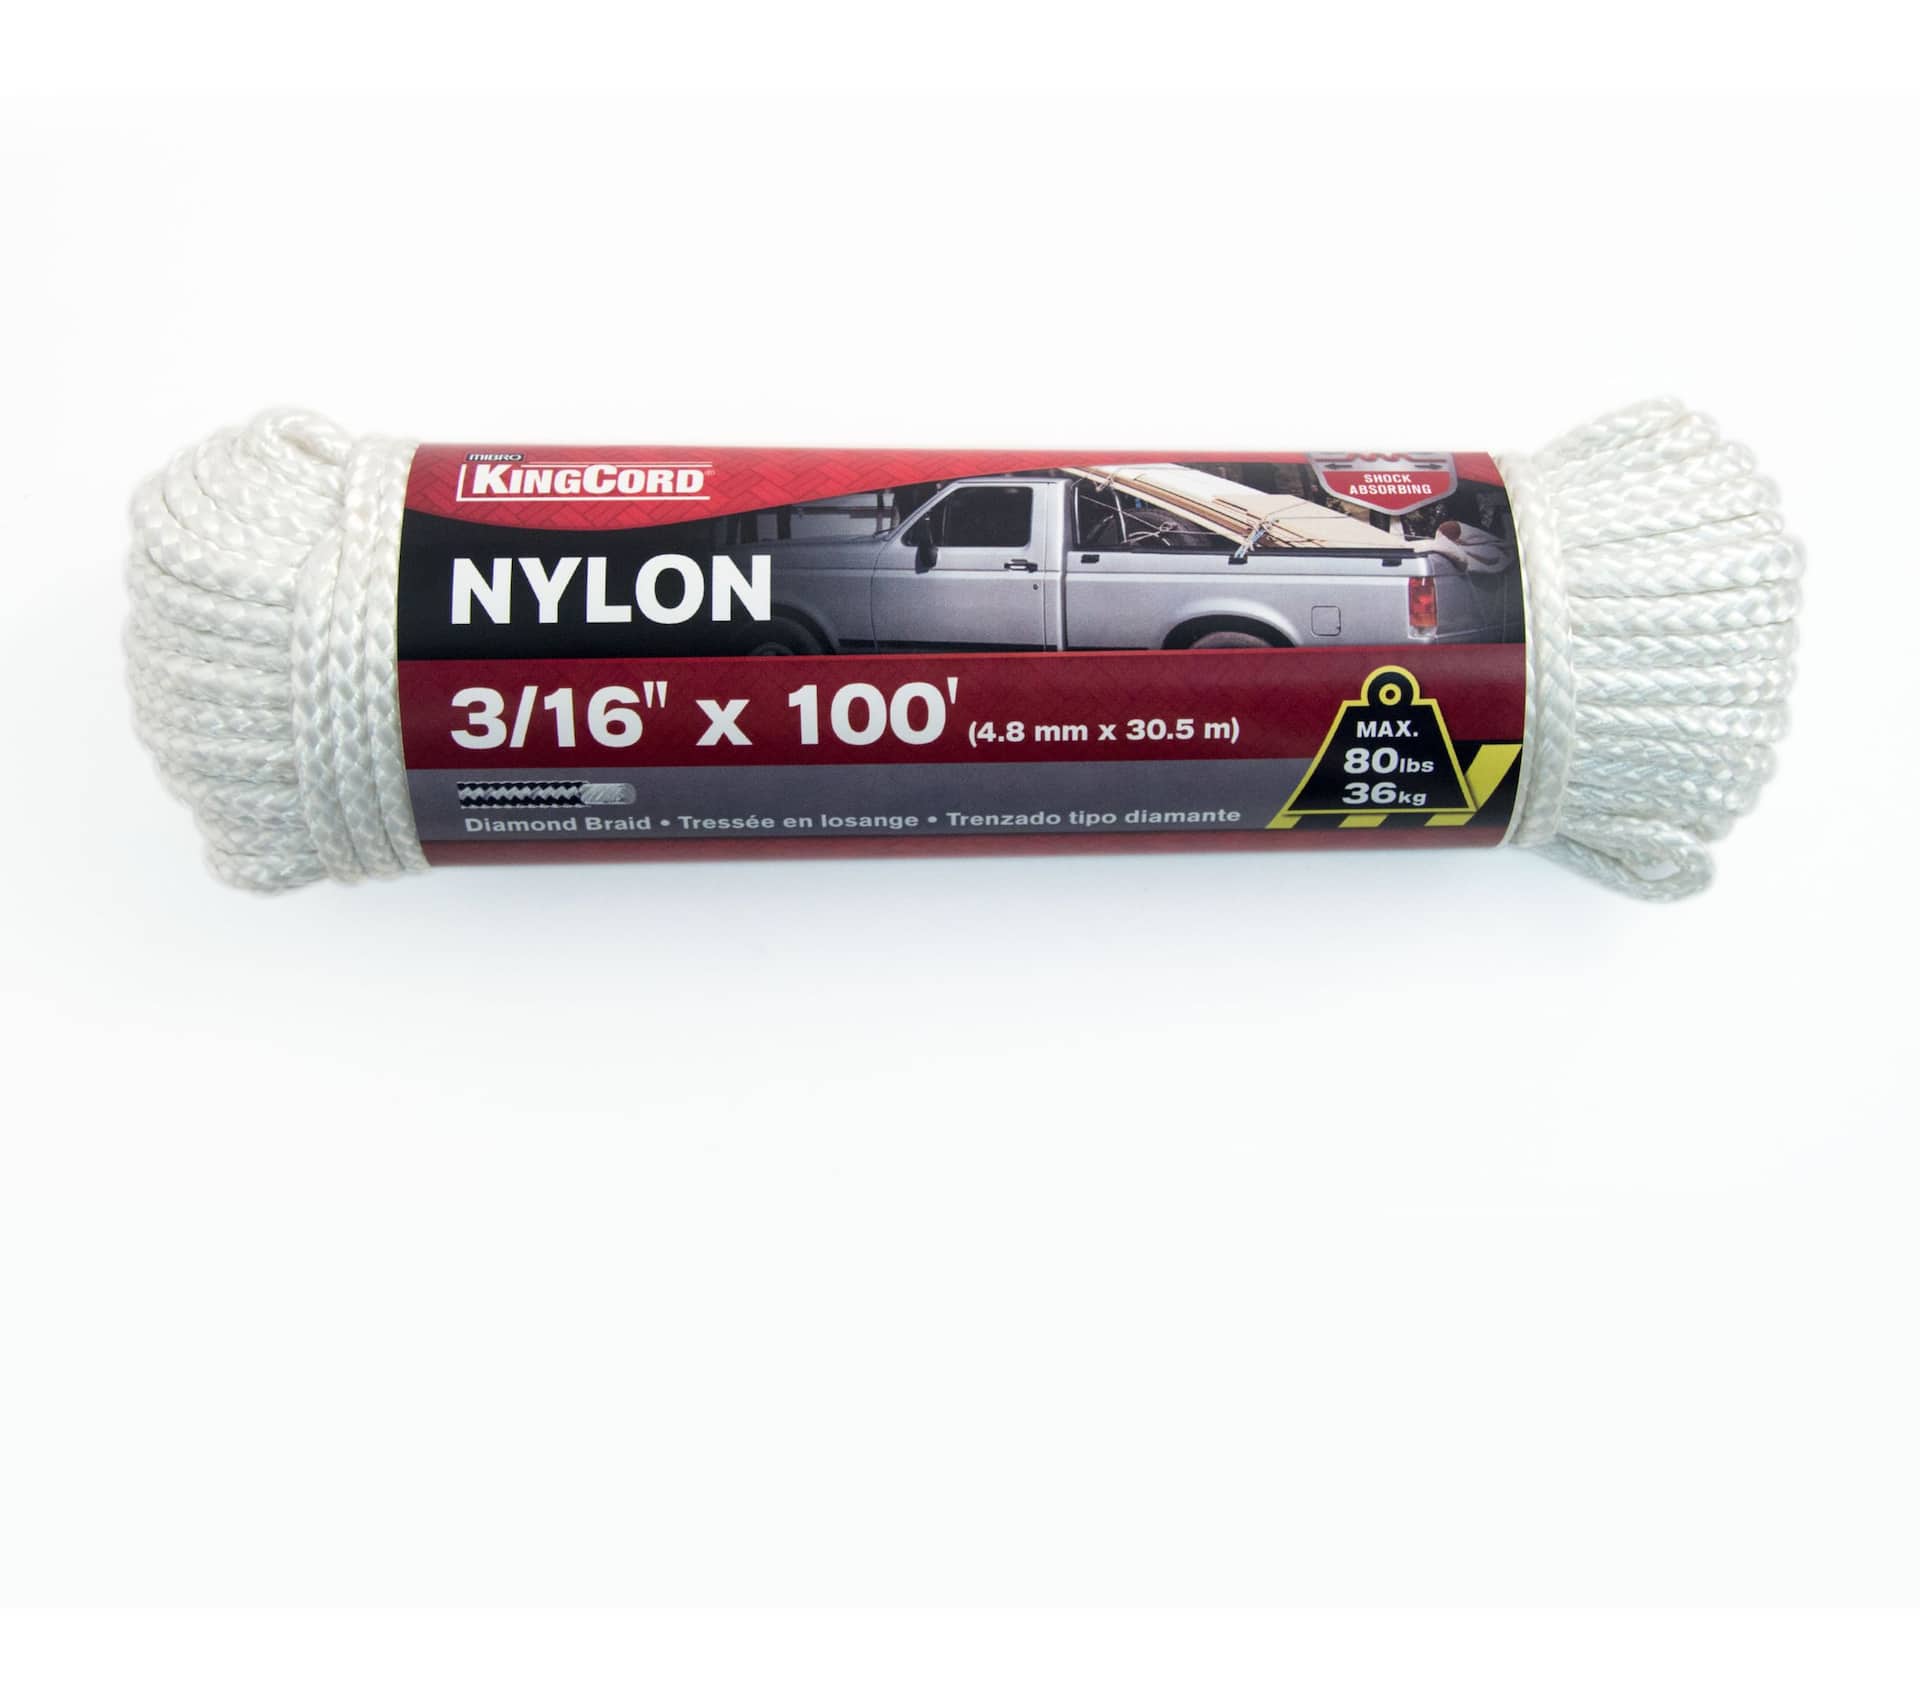 Ben-Mor Nylon Diamond Braided Rope, Abrasion Resistance, SWL-135-lbs,  White, 3/8-in x 50-ft